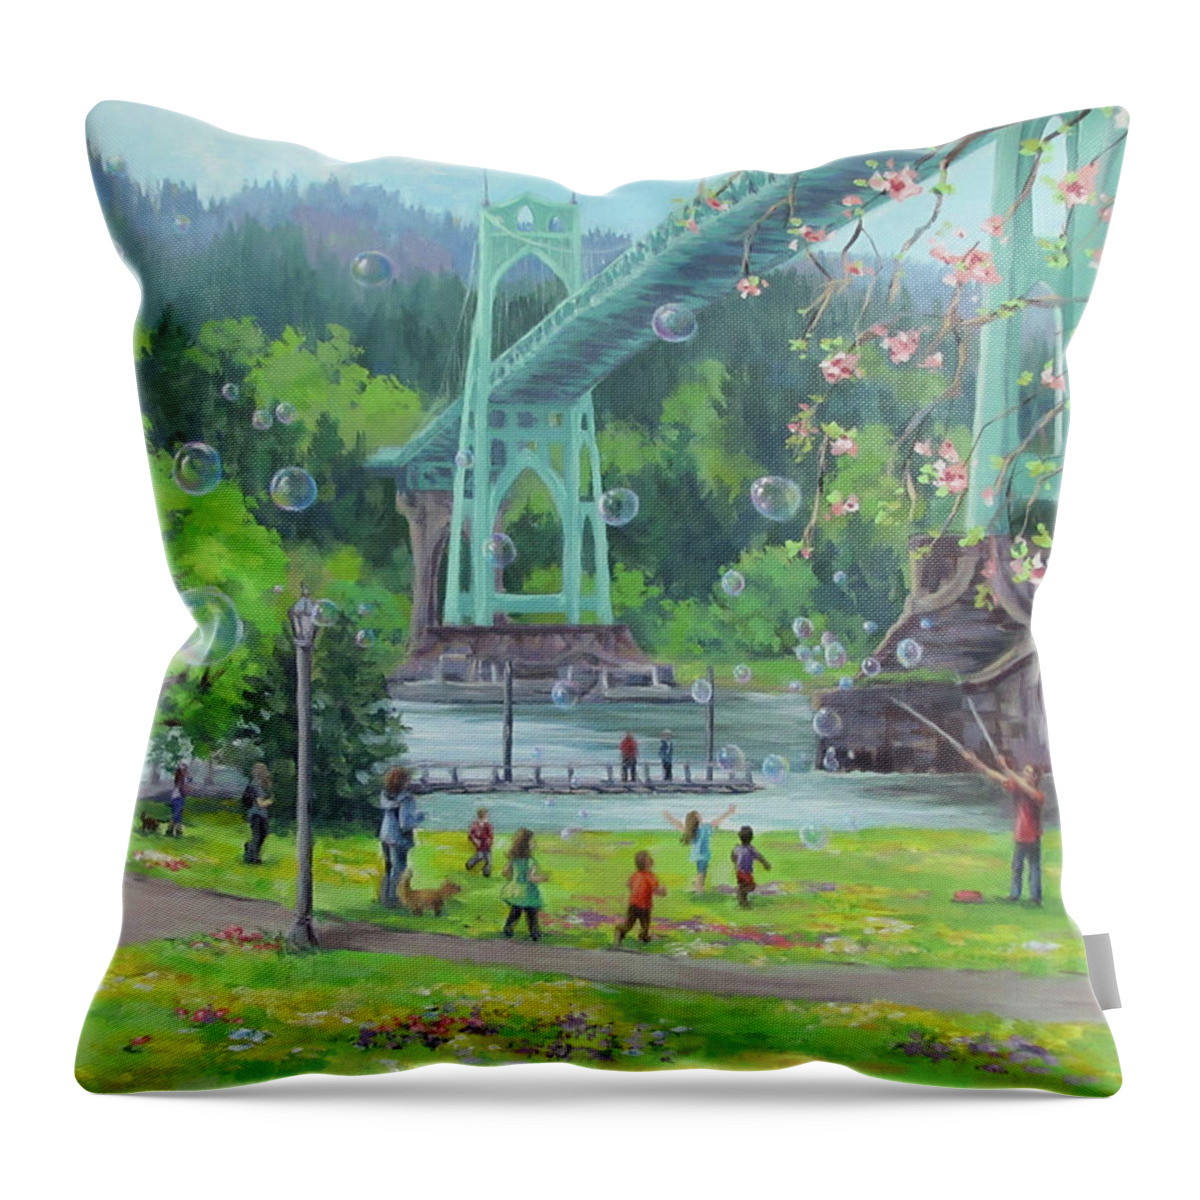 Portland Throw Pillow featuring the painting Bubbly Bridge by Karen Ilari